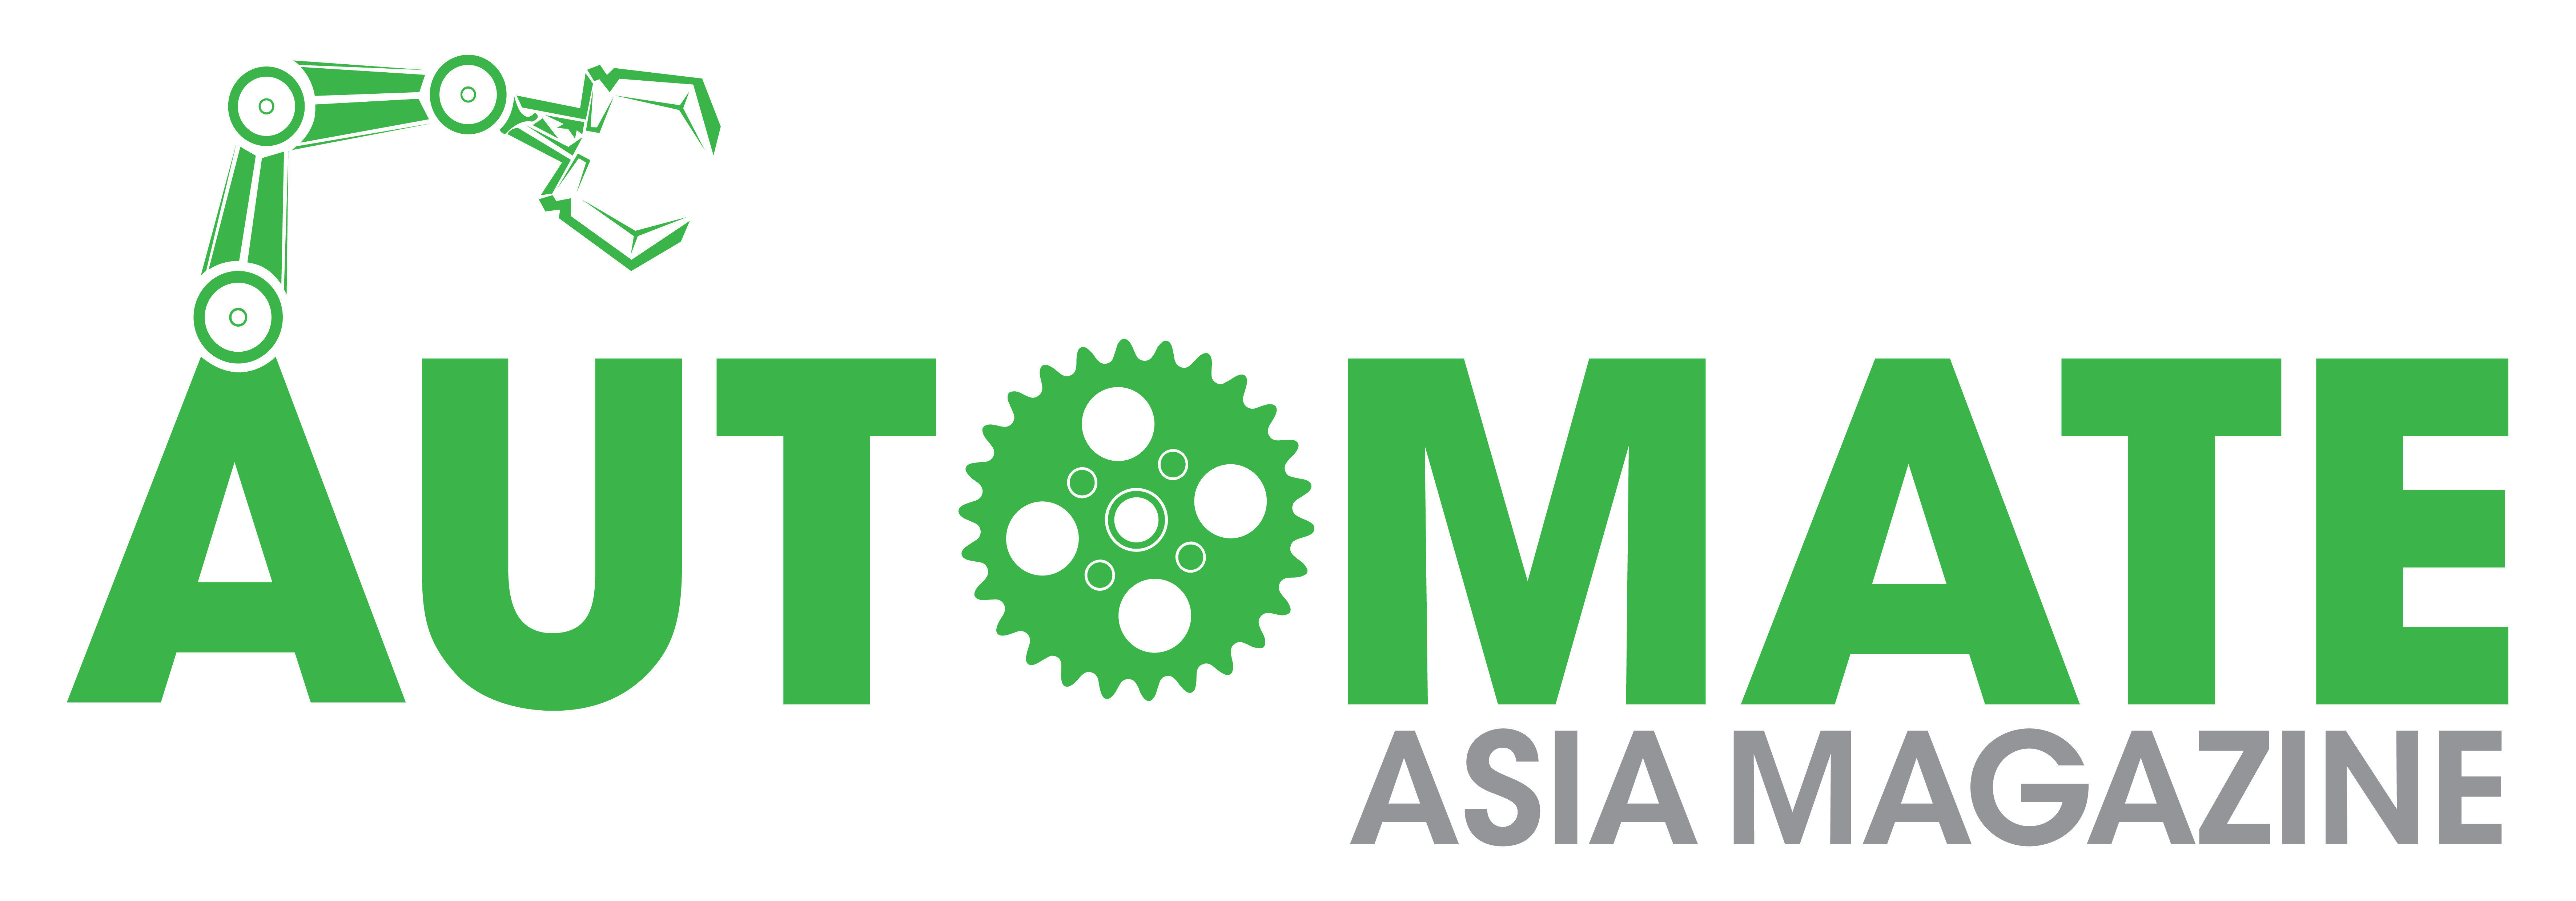 Asia Automate Magazine Logo Final 01